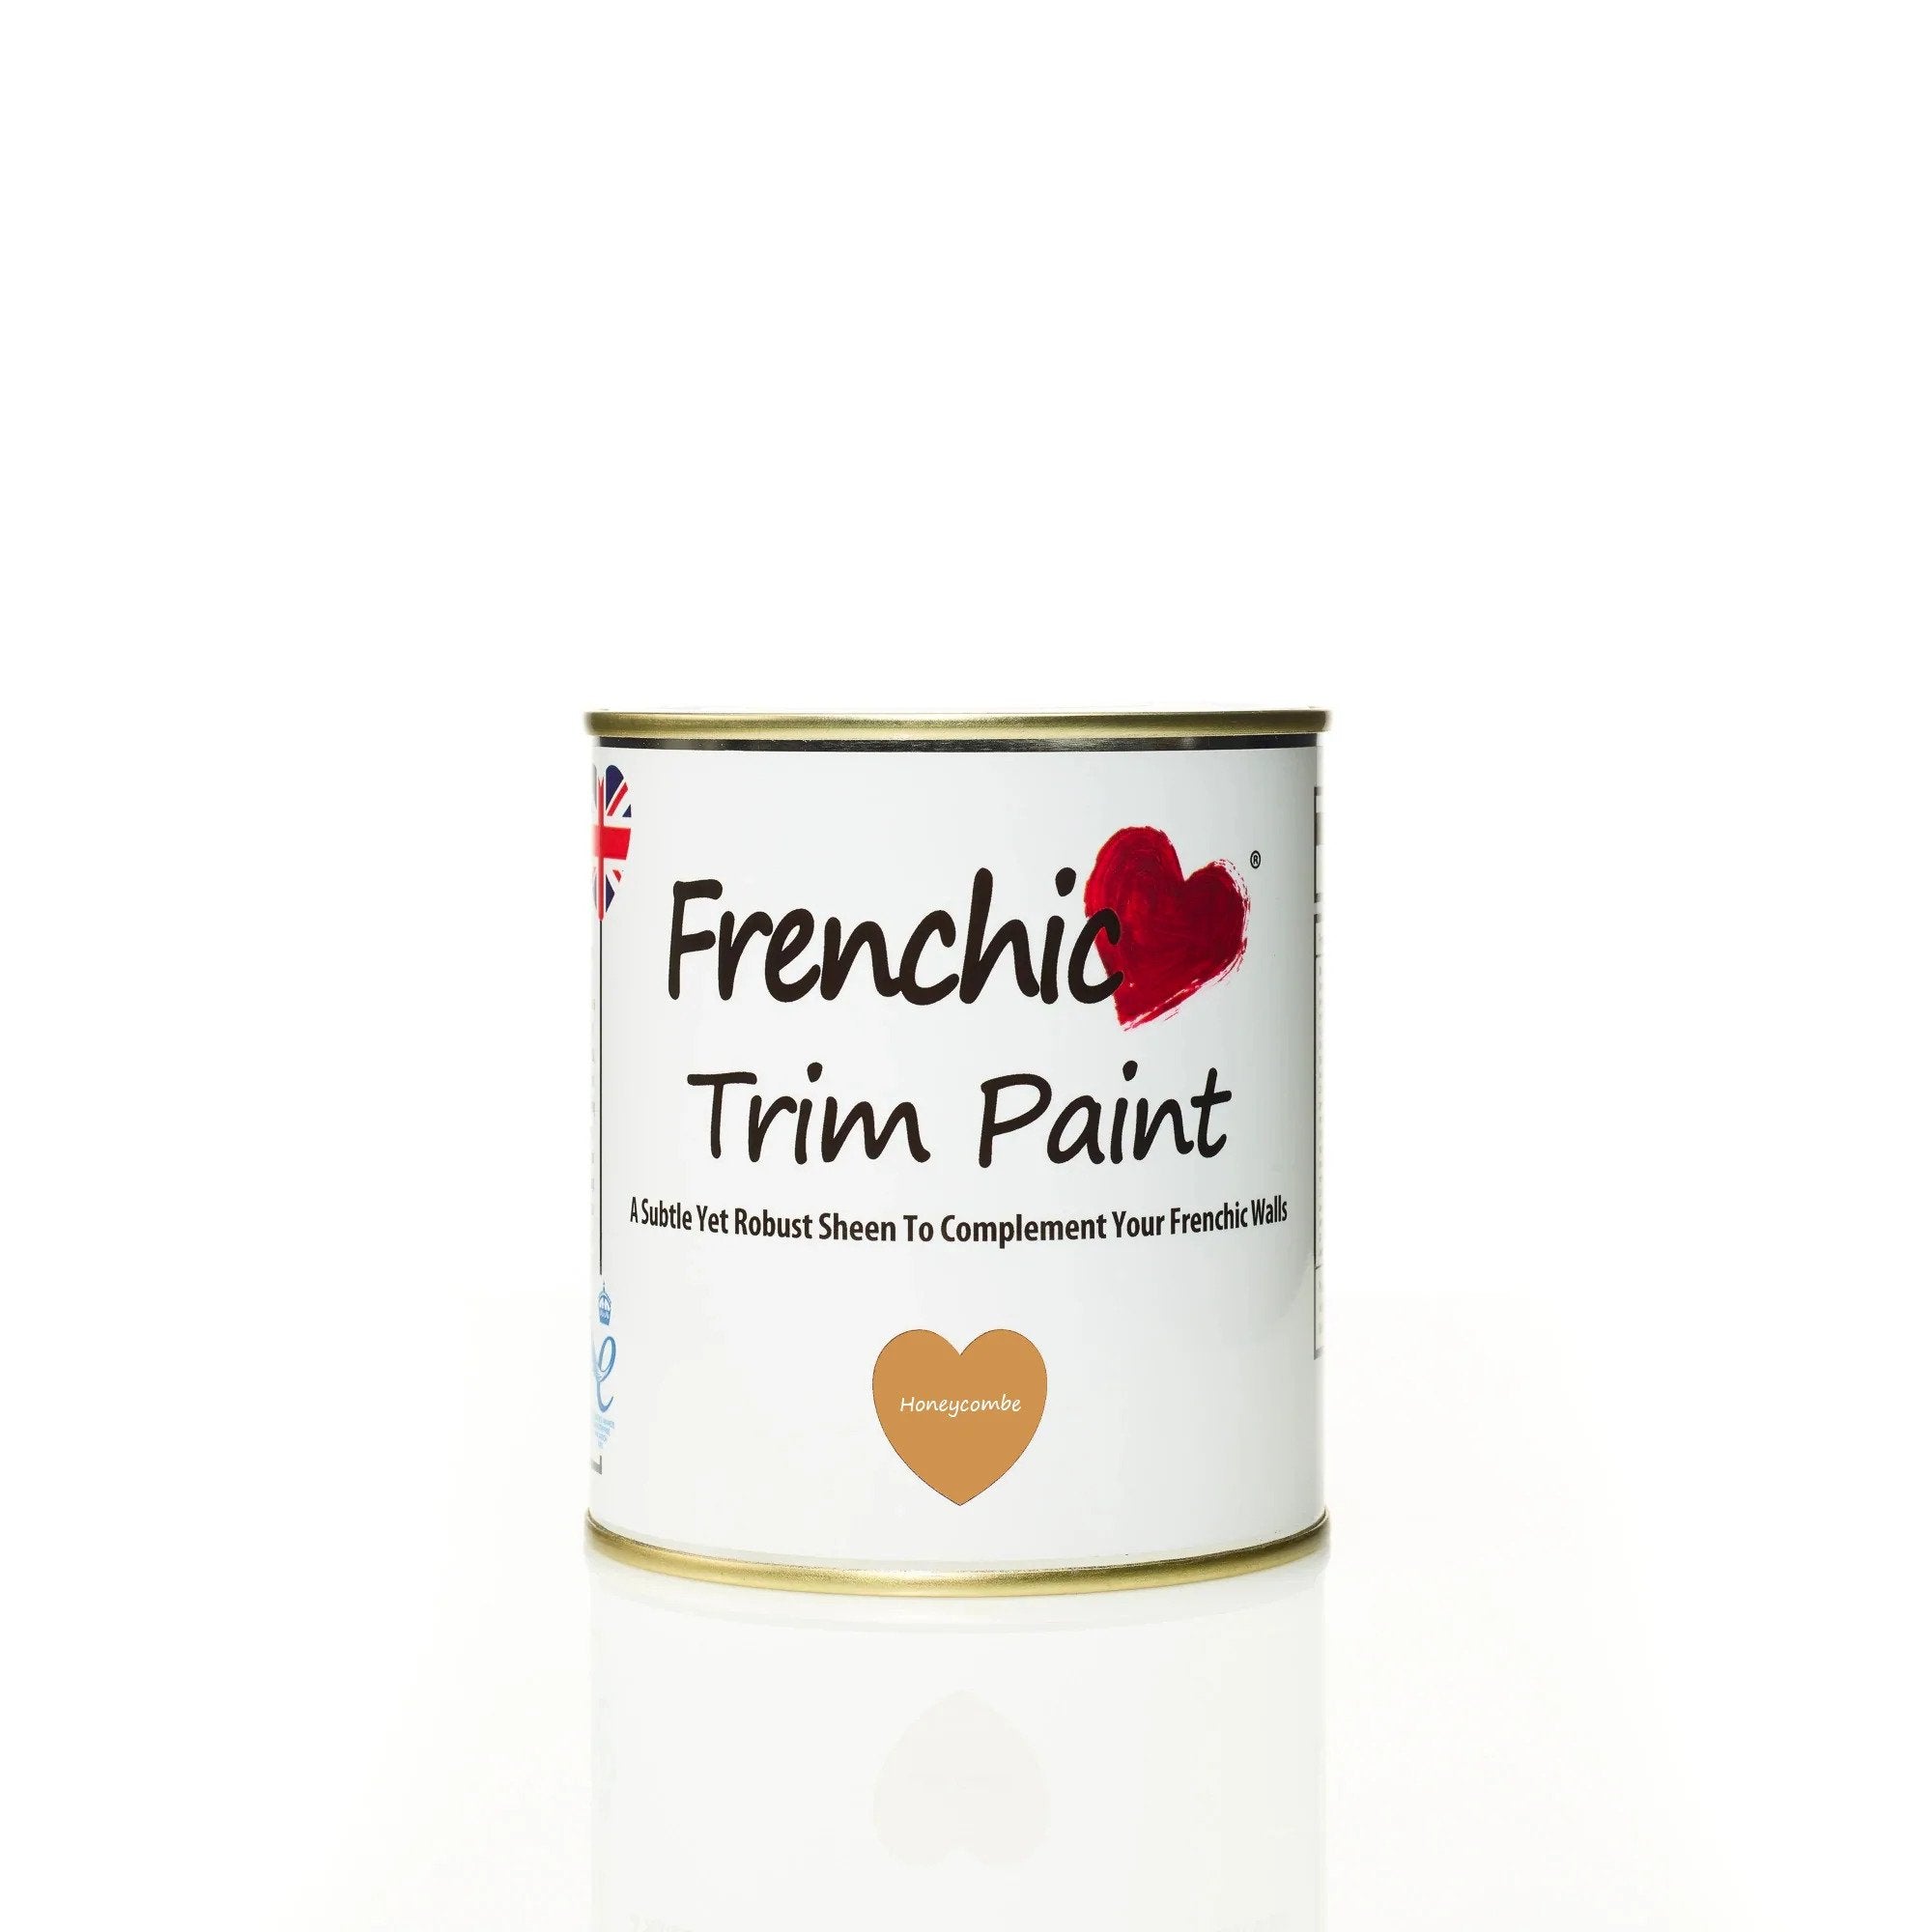 Ovi ja listamaali Trim Paint Frenchic sarjasta. 